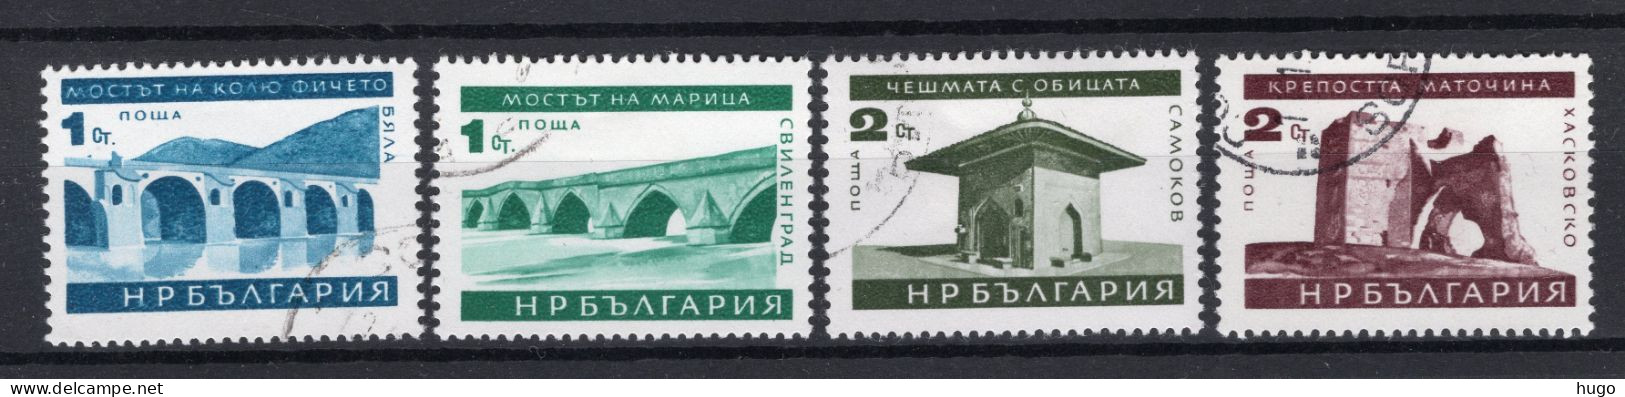 BULGARIJE Yt. 1407/1410° Gestempeld 1966 - Used Stamps